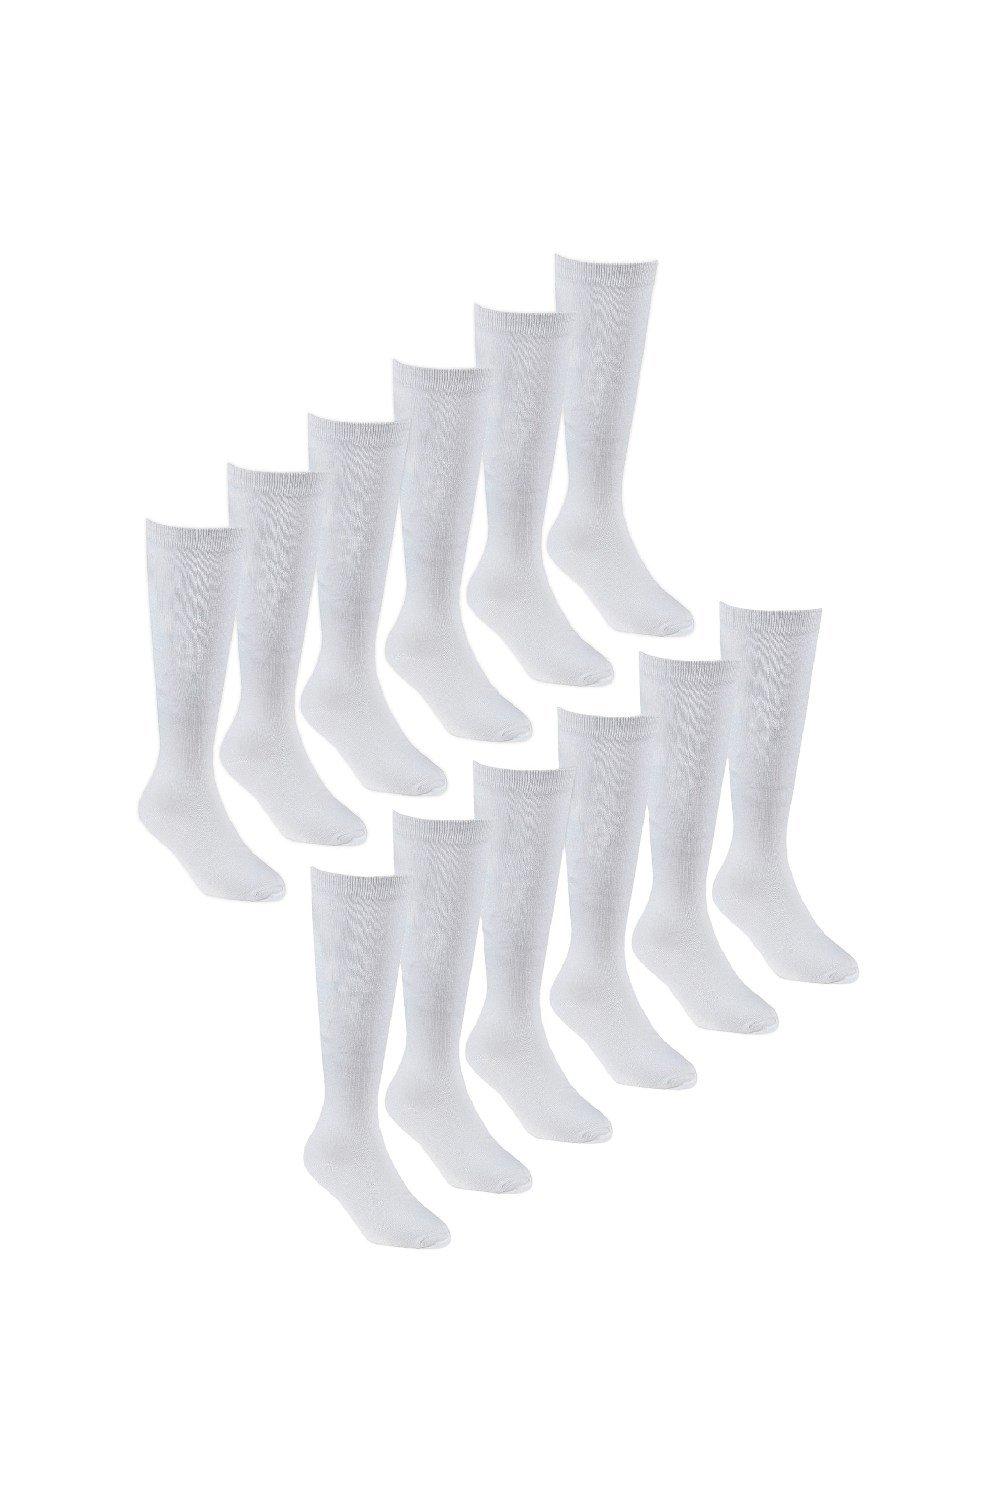 12 Pair Knee High Bamboo Socks Soft Plain Long School Socks